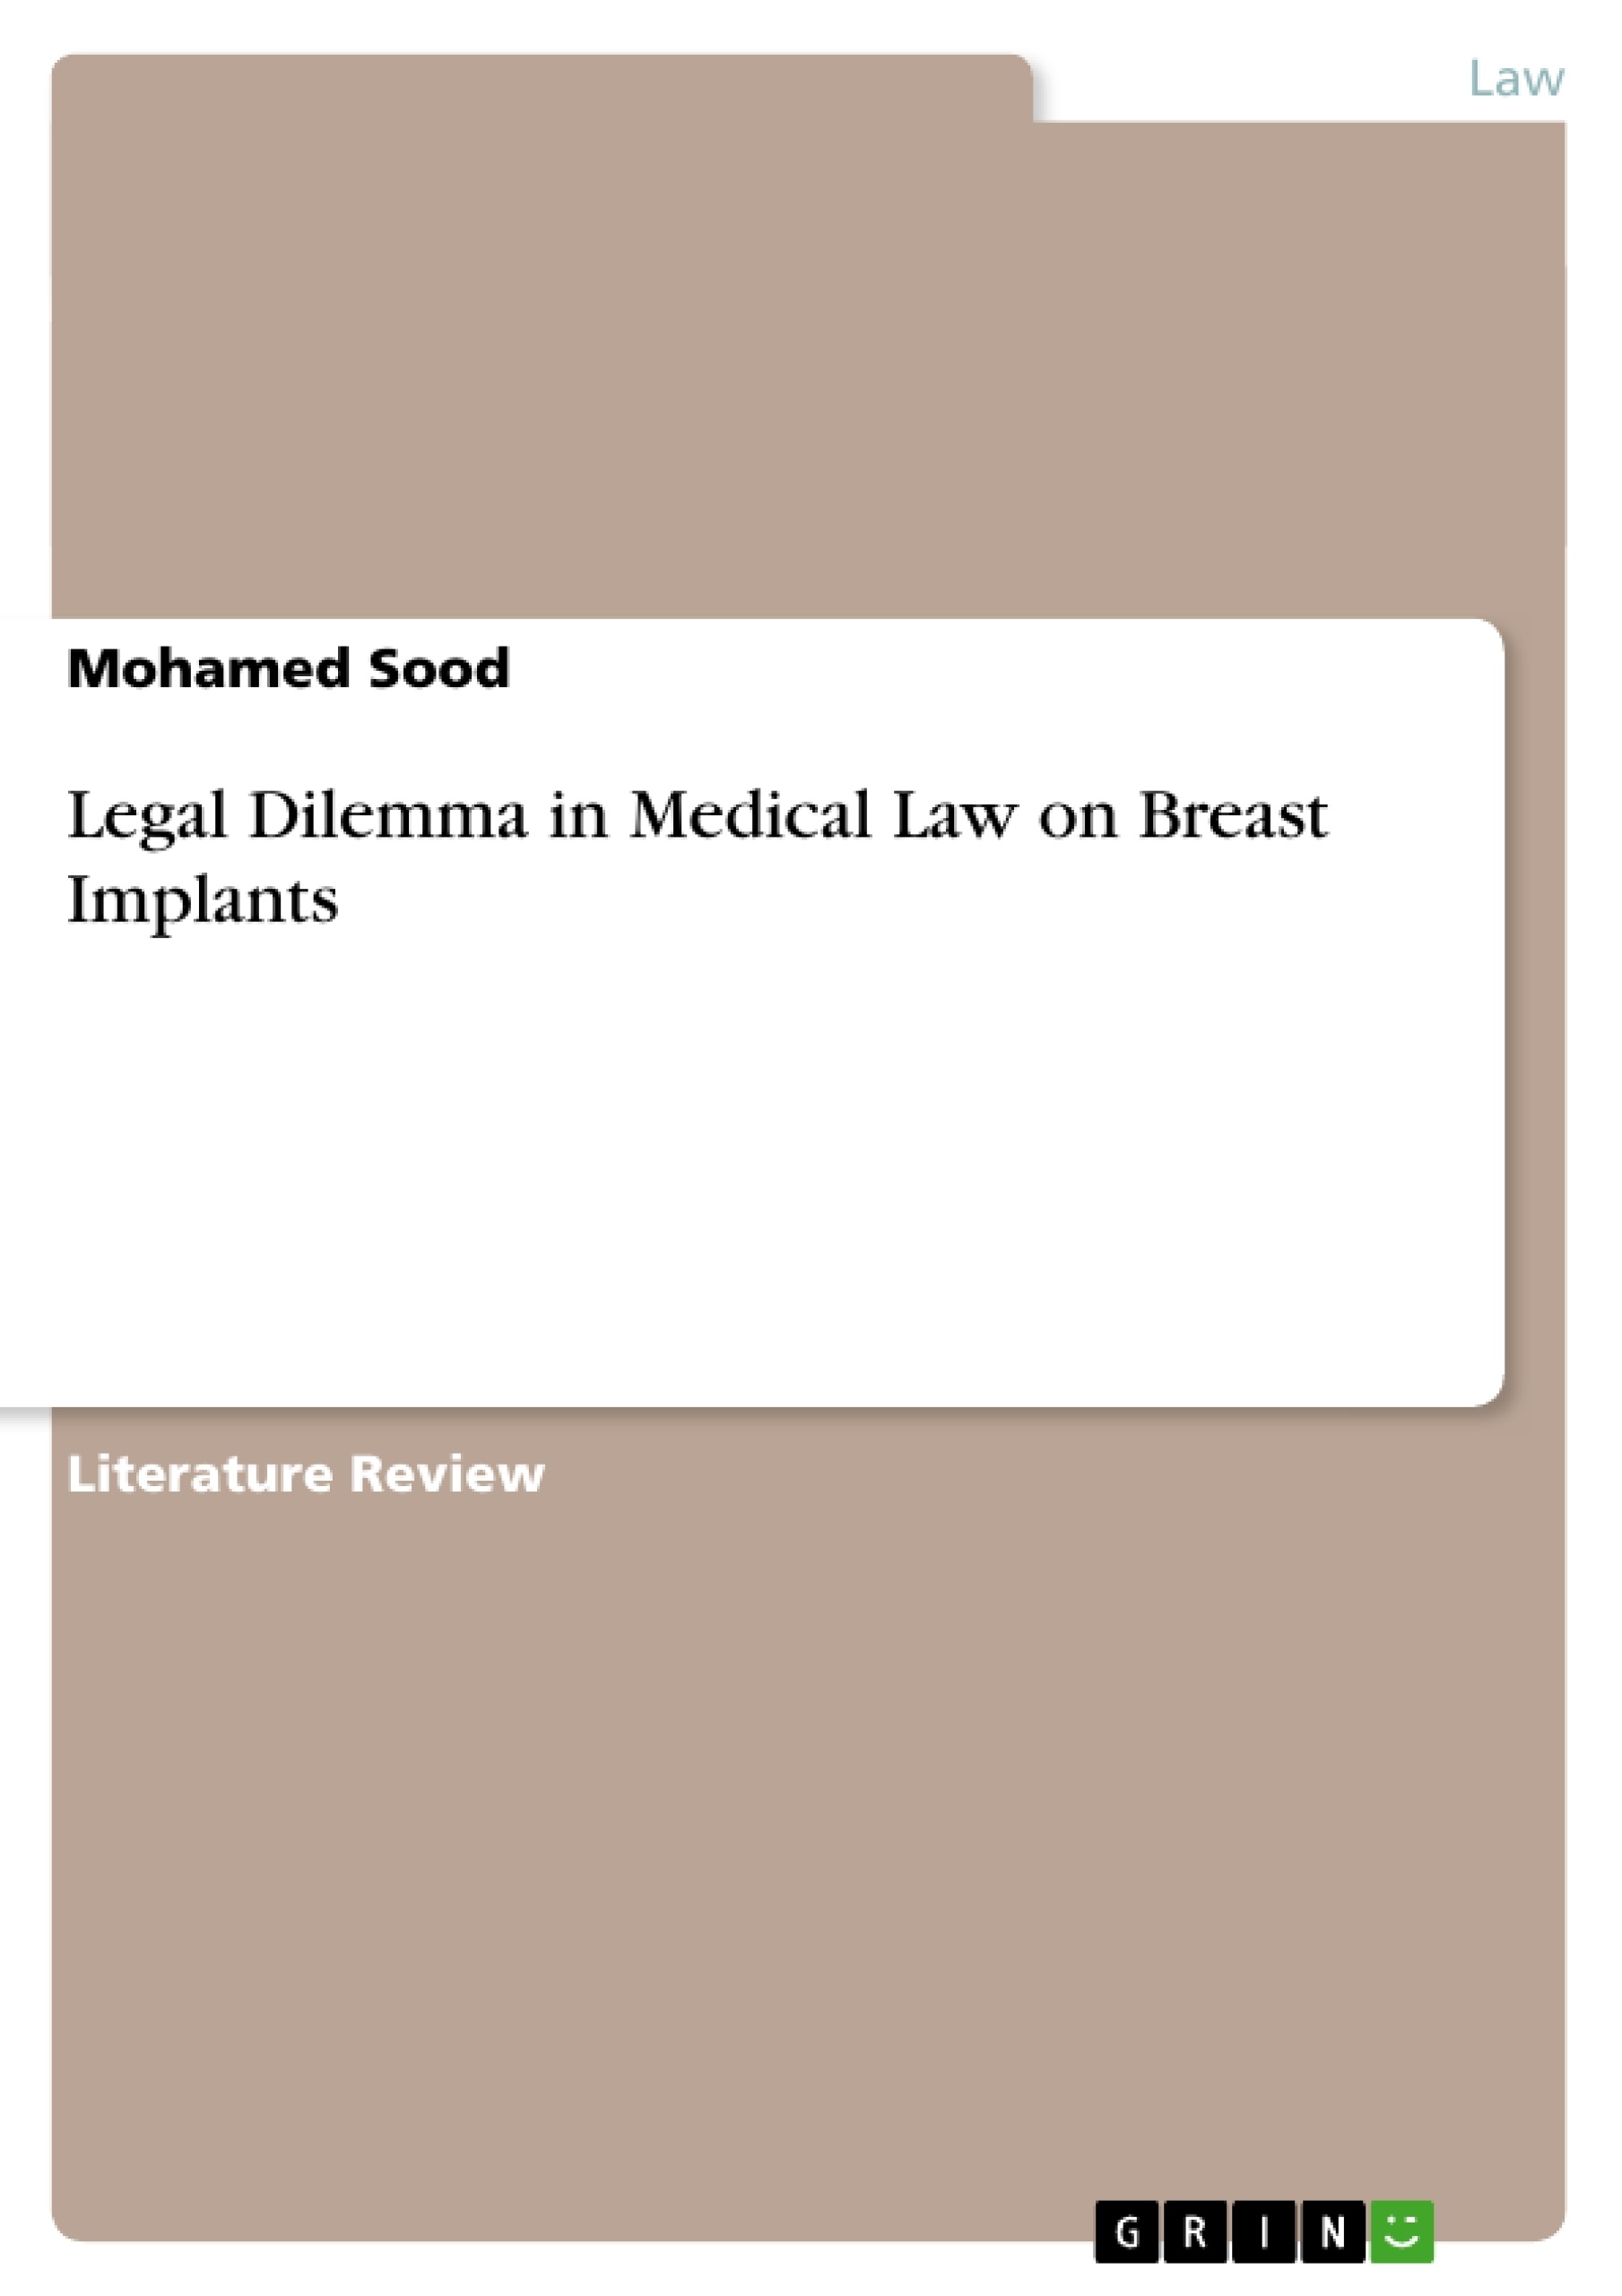 Dow corning breast implants essay